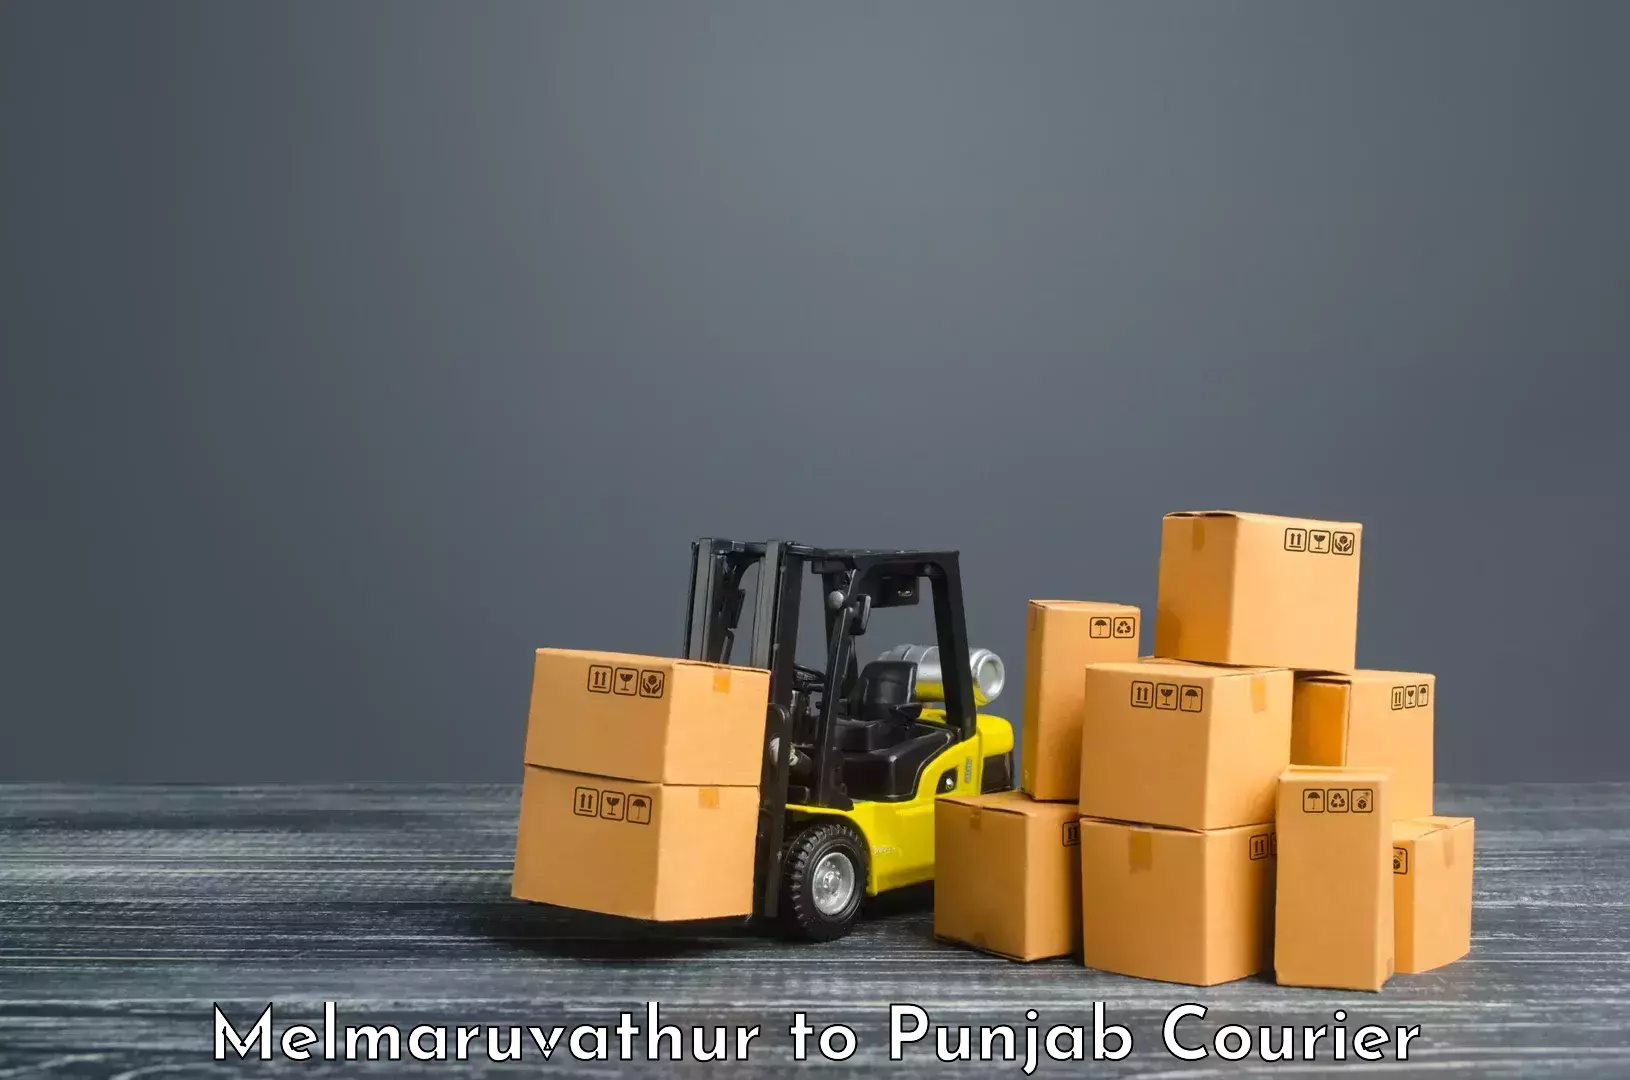 Cash on delivery service Melmaruvathur to Dinanagar